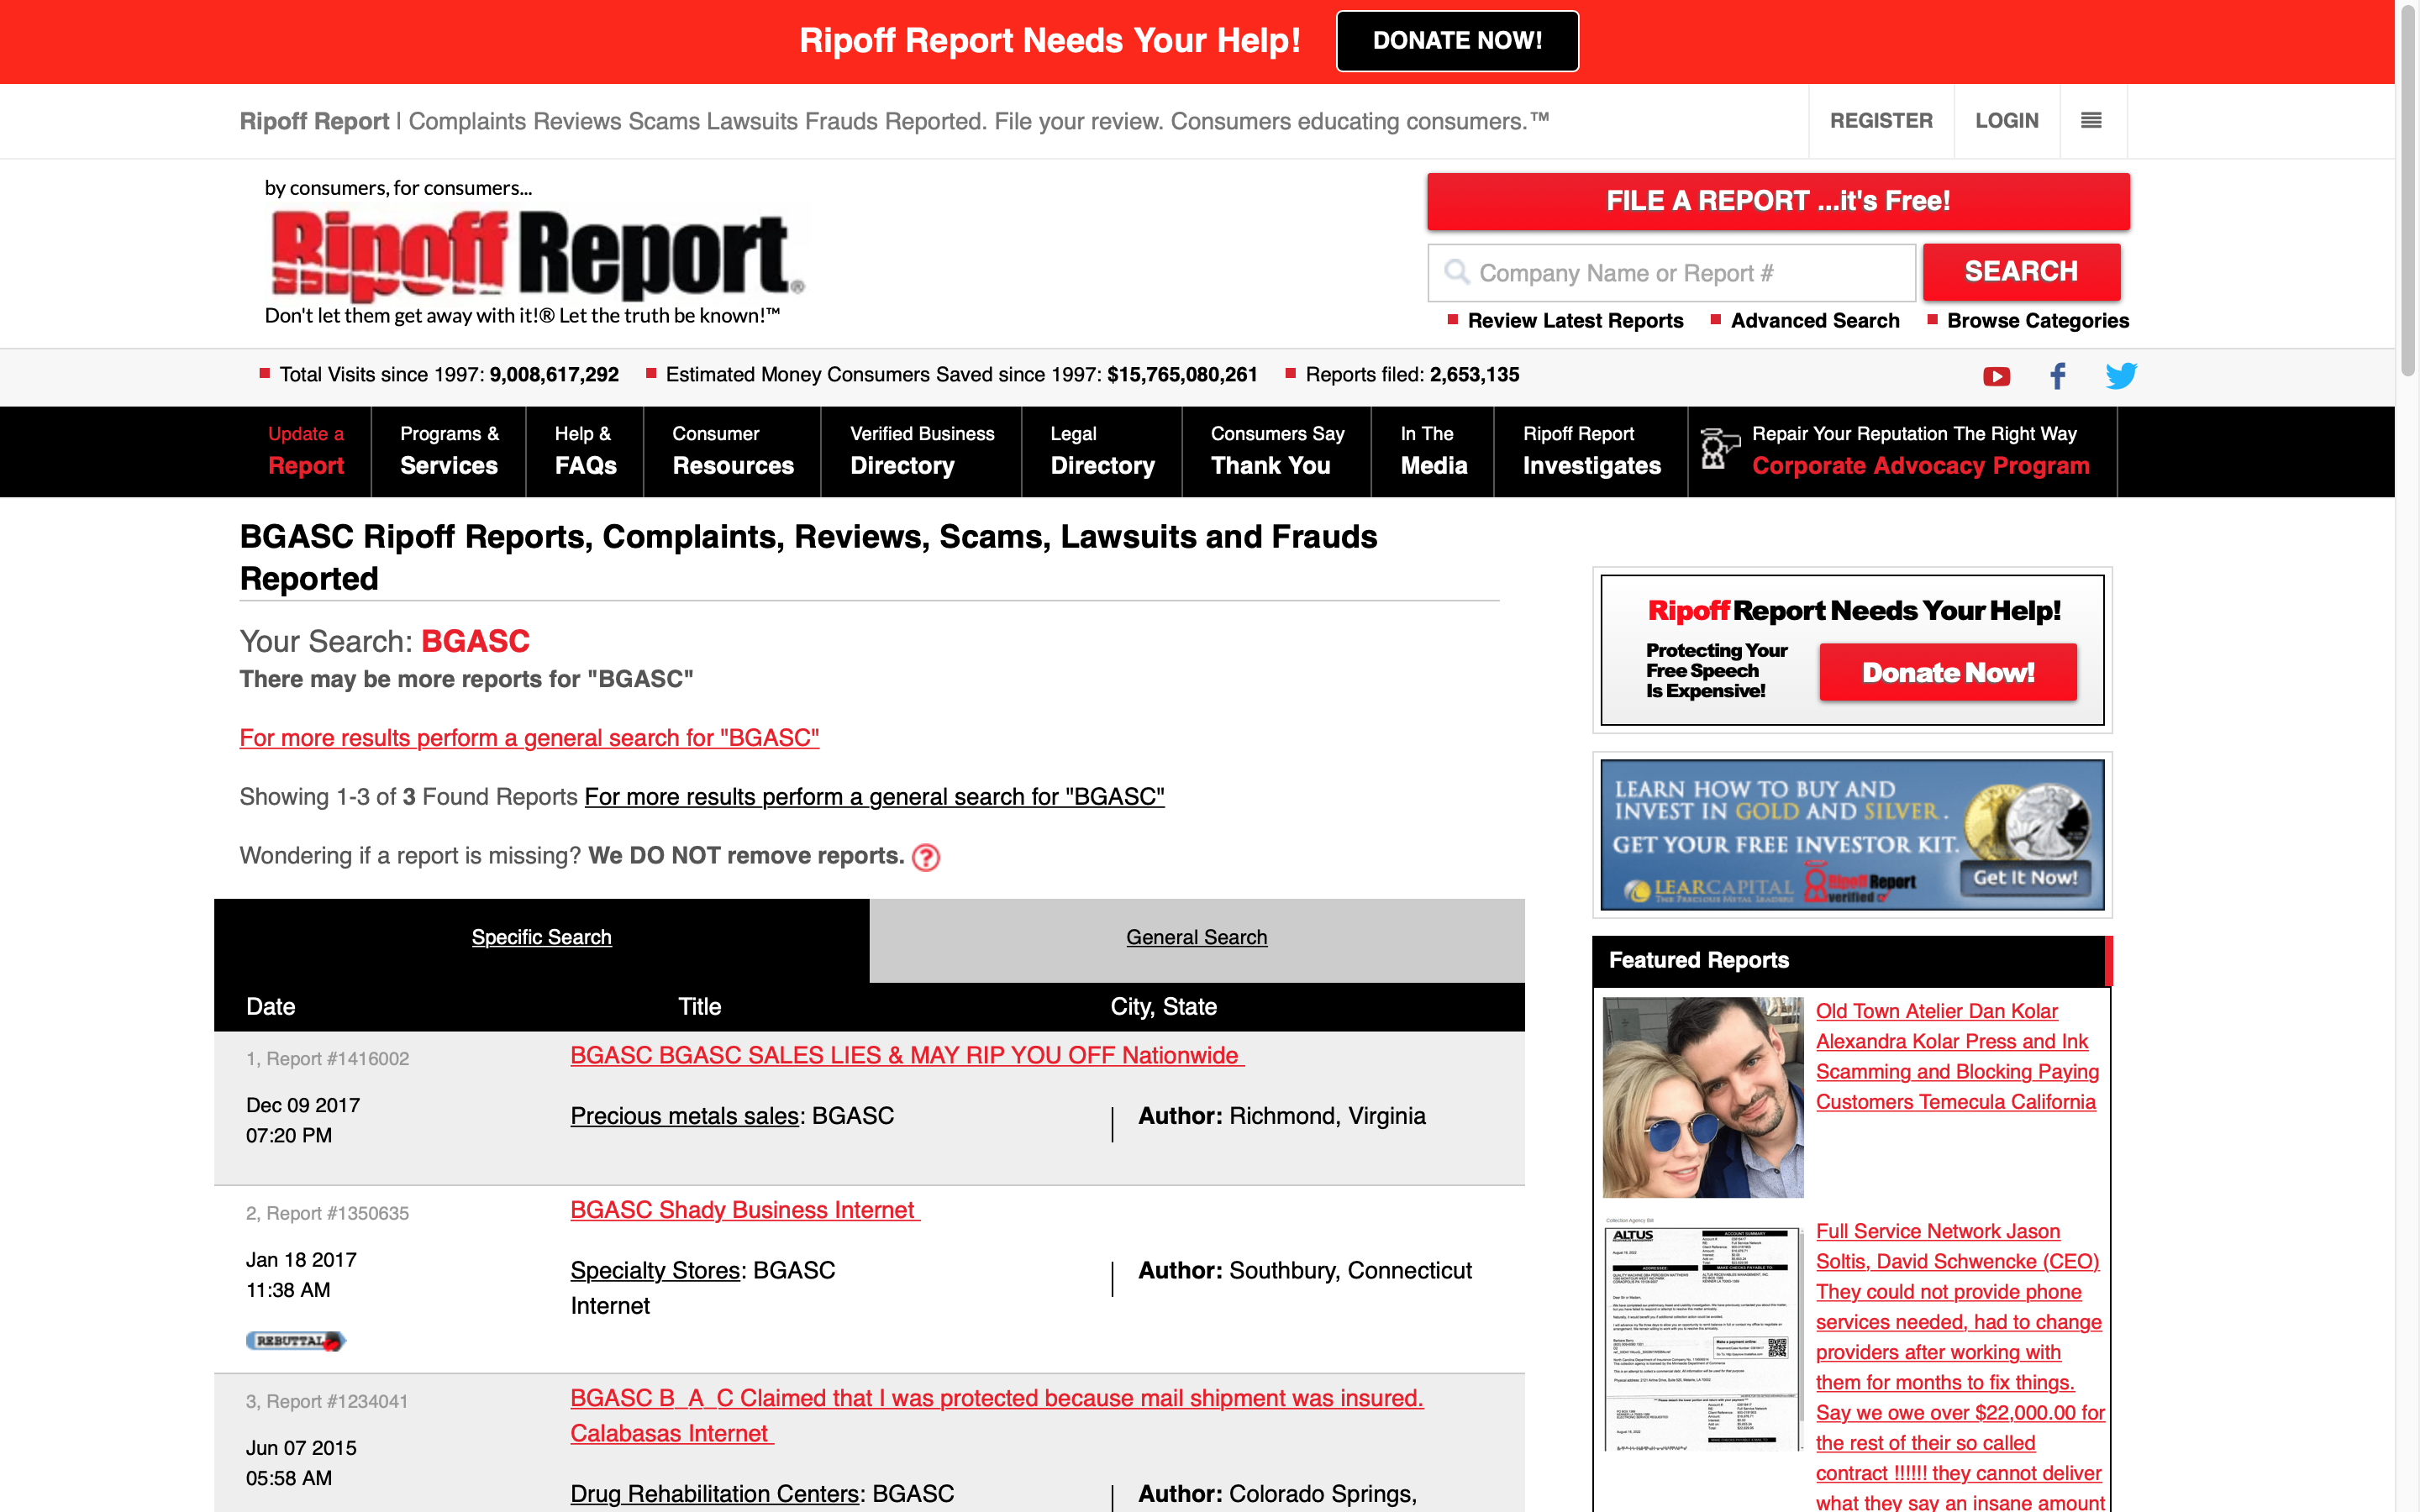 BGASC Ripoff Reports